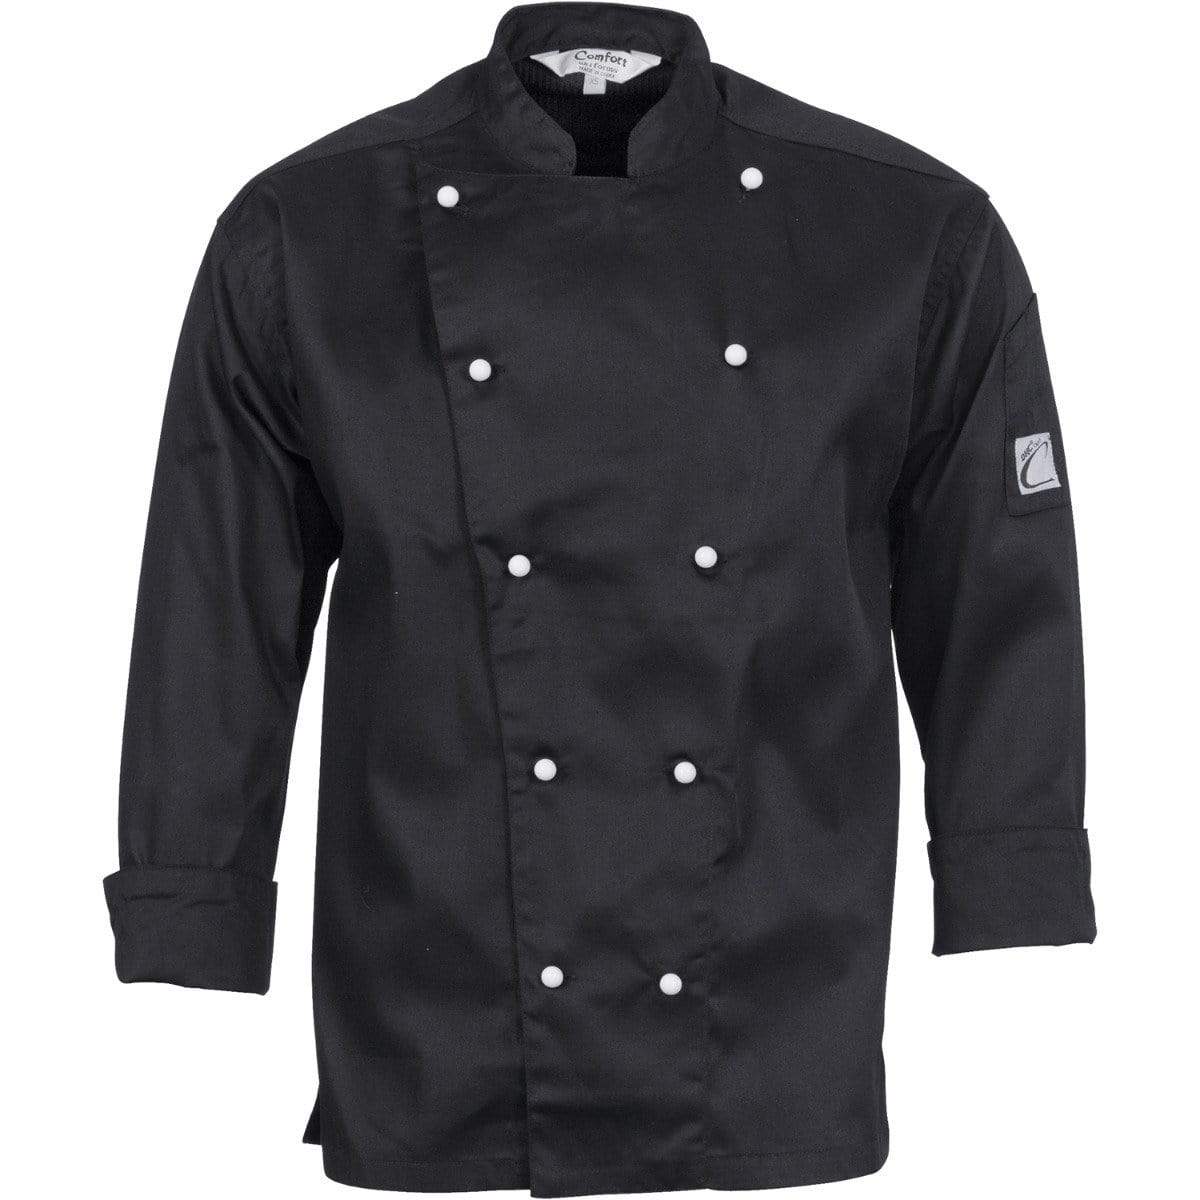 Dnc Workwear Traditional Short Sleeve Chef Jacket - 1102 Hospitality & Chefwear DNC Workwear Black XS 